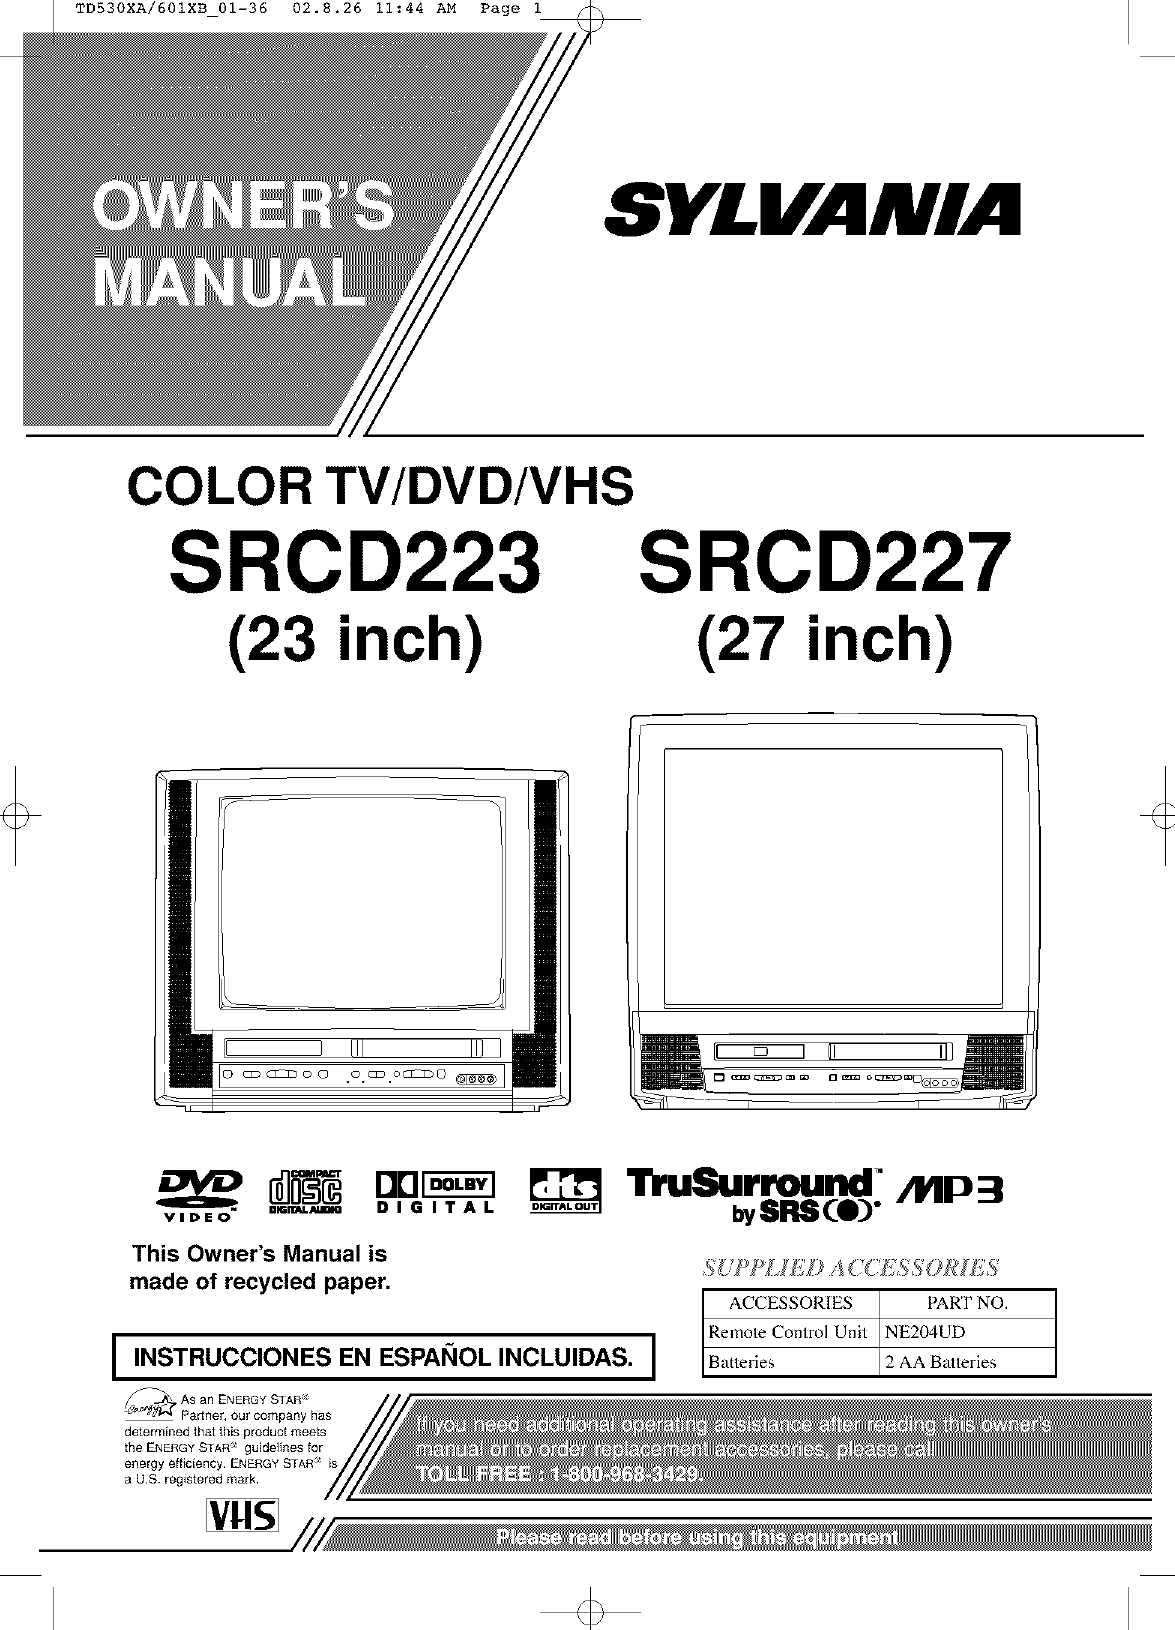 SYLVANIA TV/VCR Or DVD Combo Manual L0212168